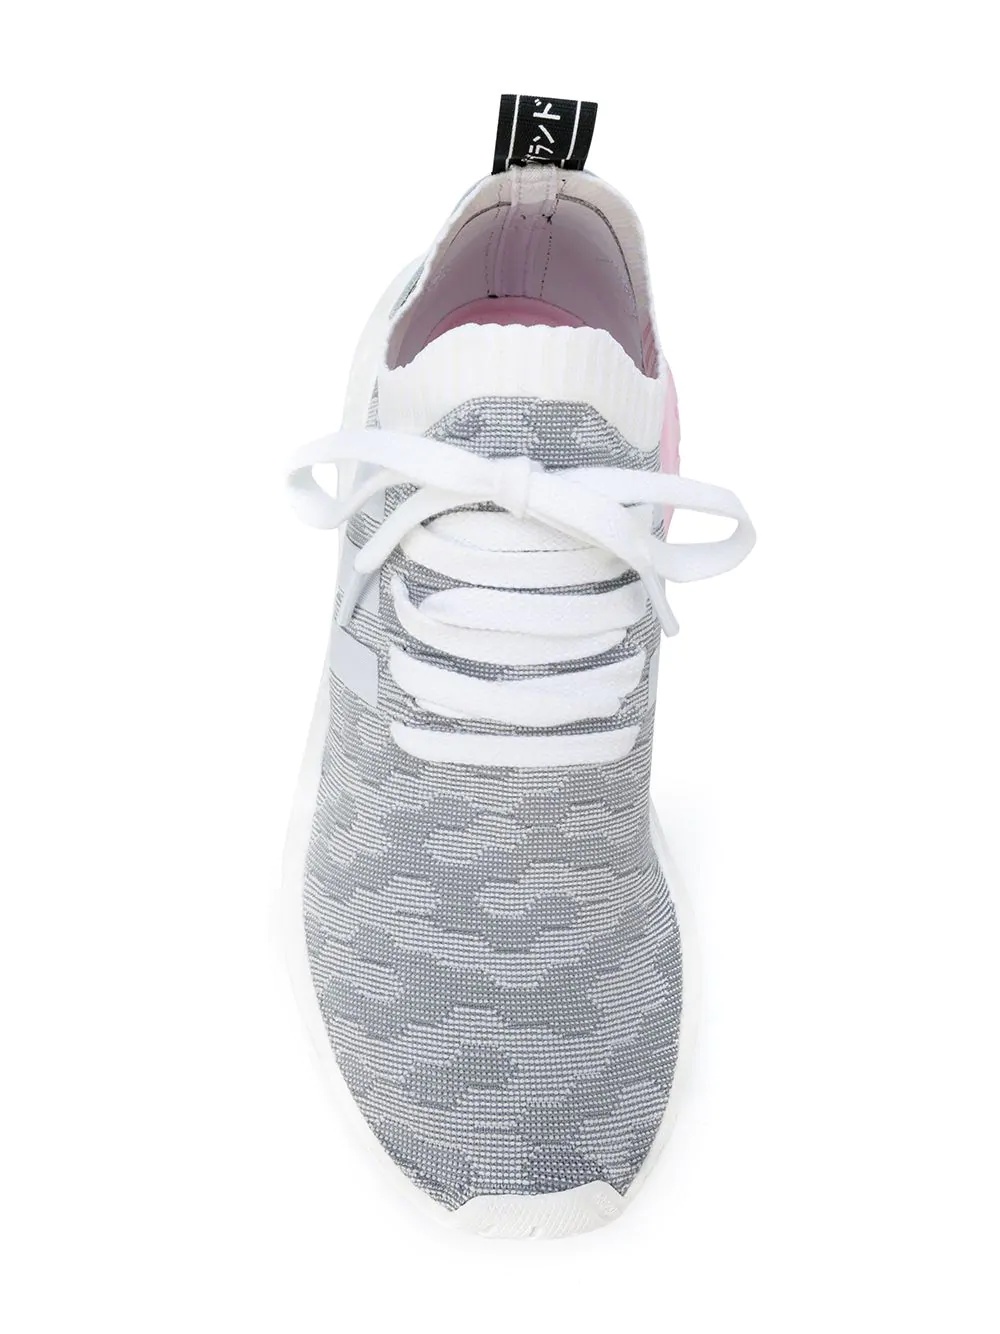 Adidas Originals NMD_R2 Primeknit sneakers - 4